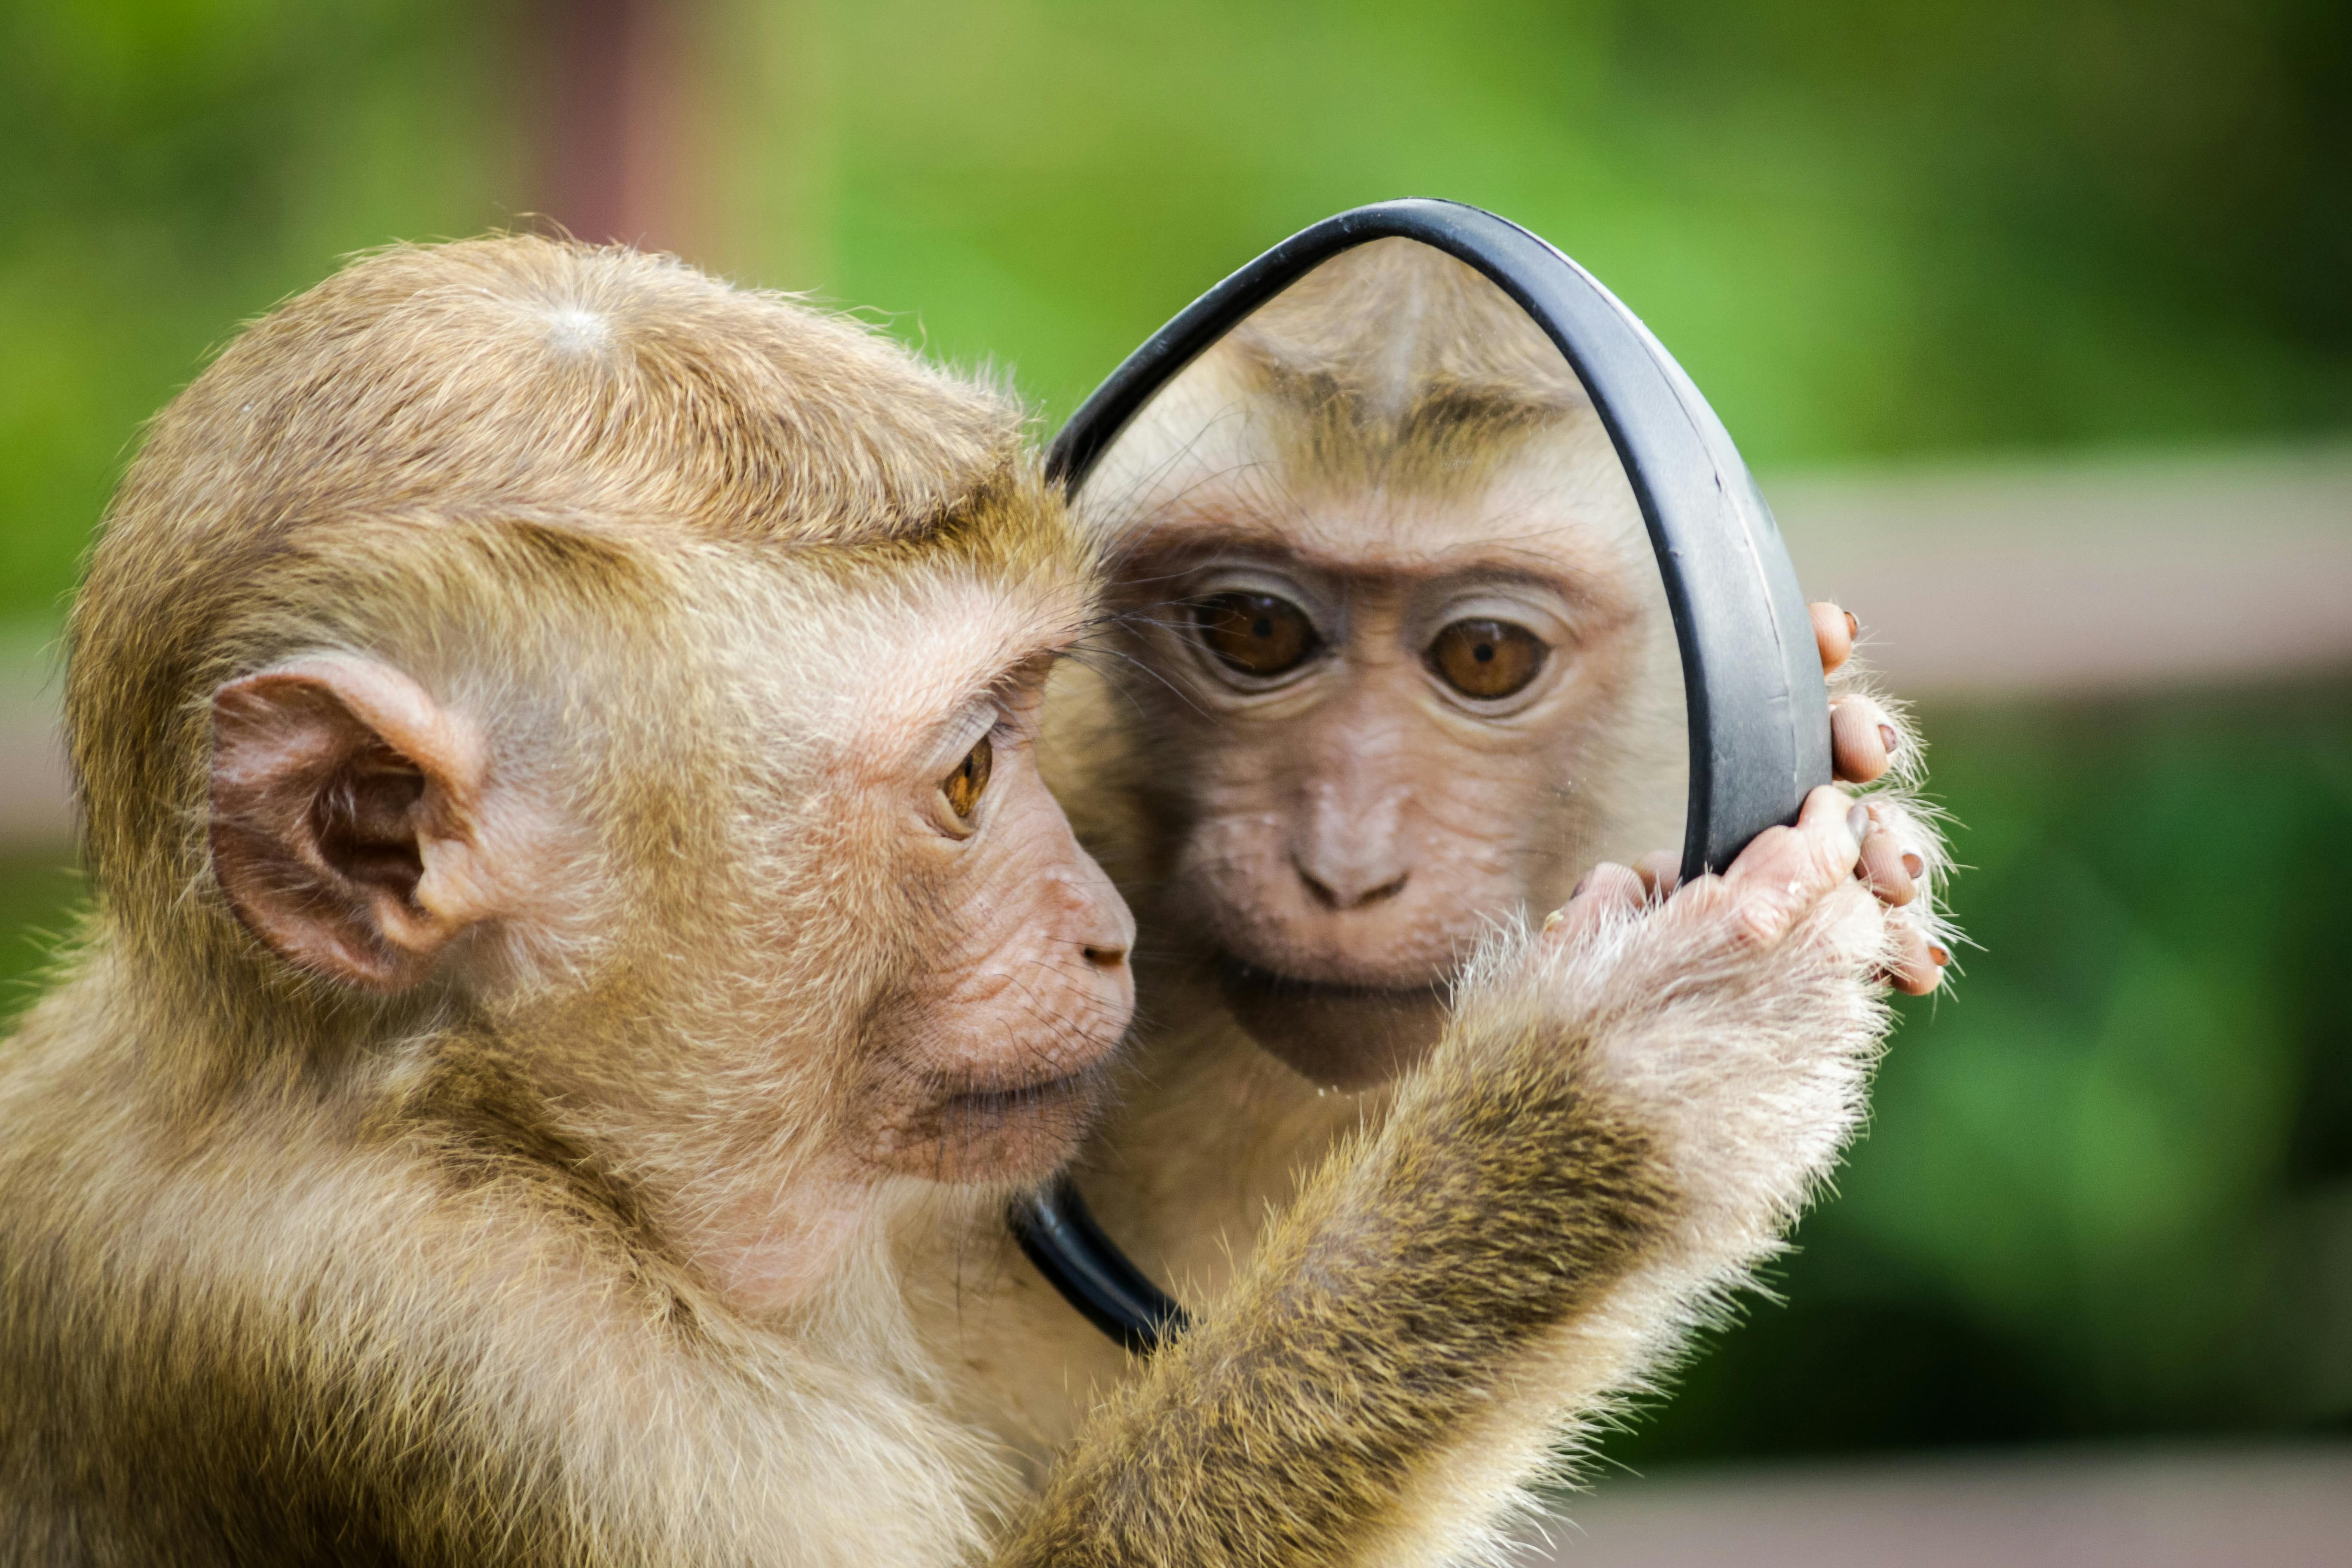 Monkey at the mirror